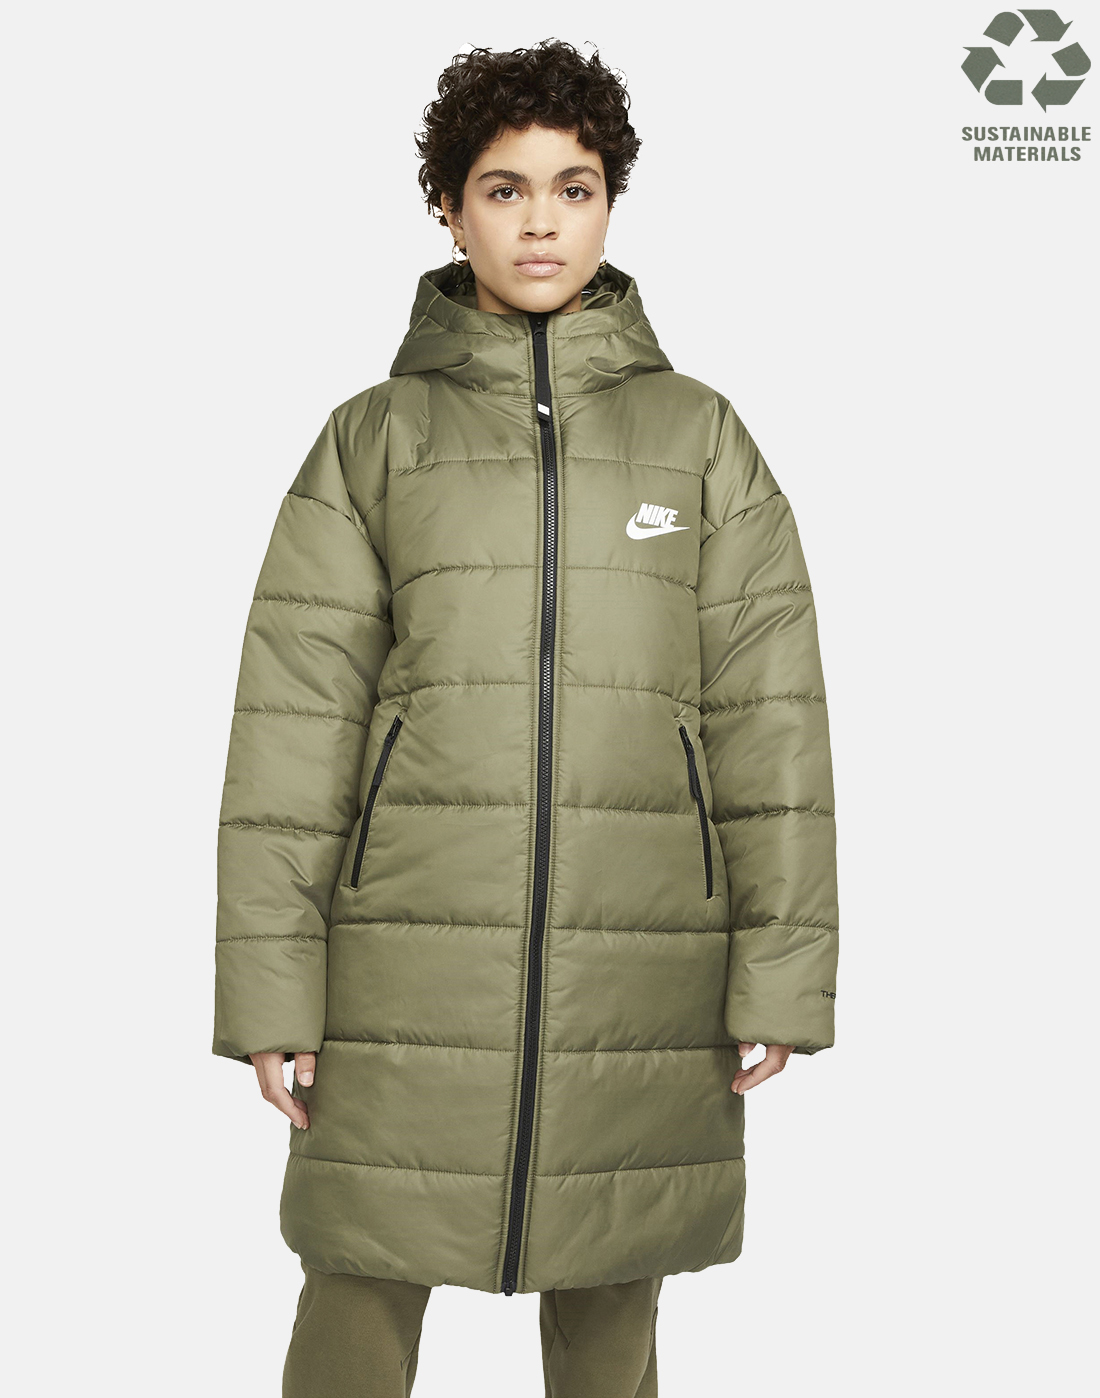 Nike Sportswear Therma-Fit Repel Green Parka Jacket DJ6999 222 Size Small